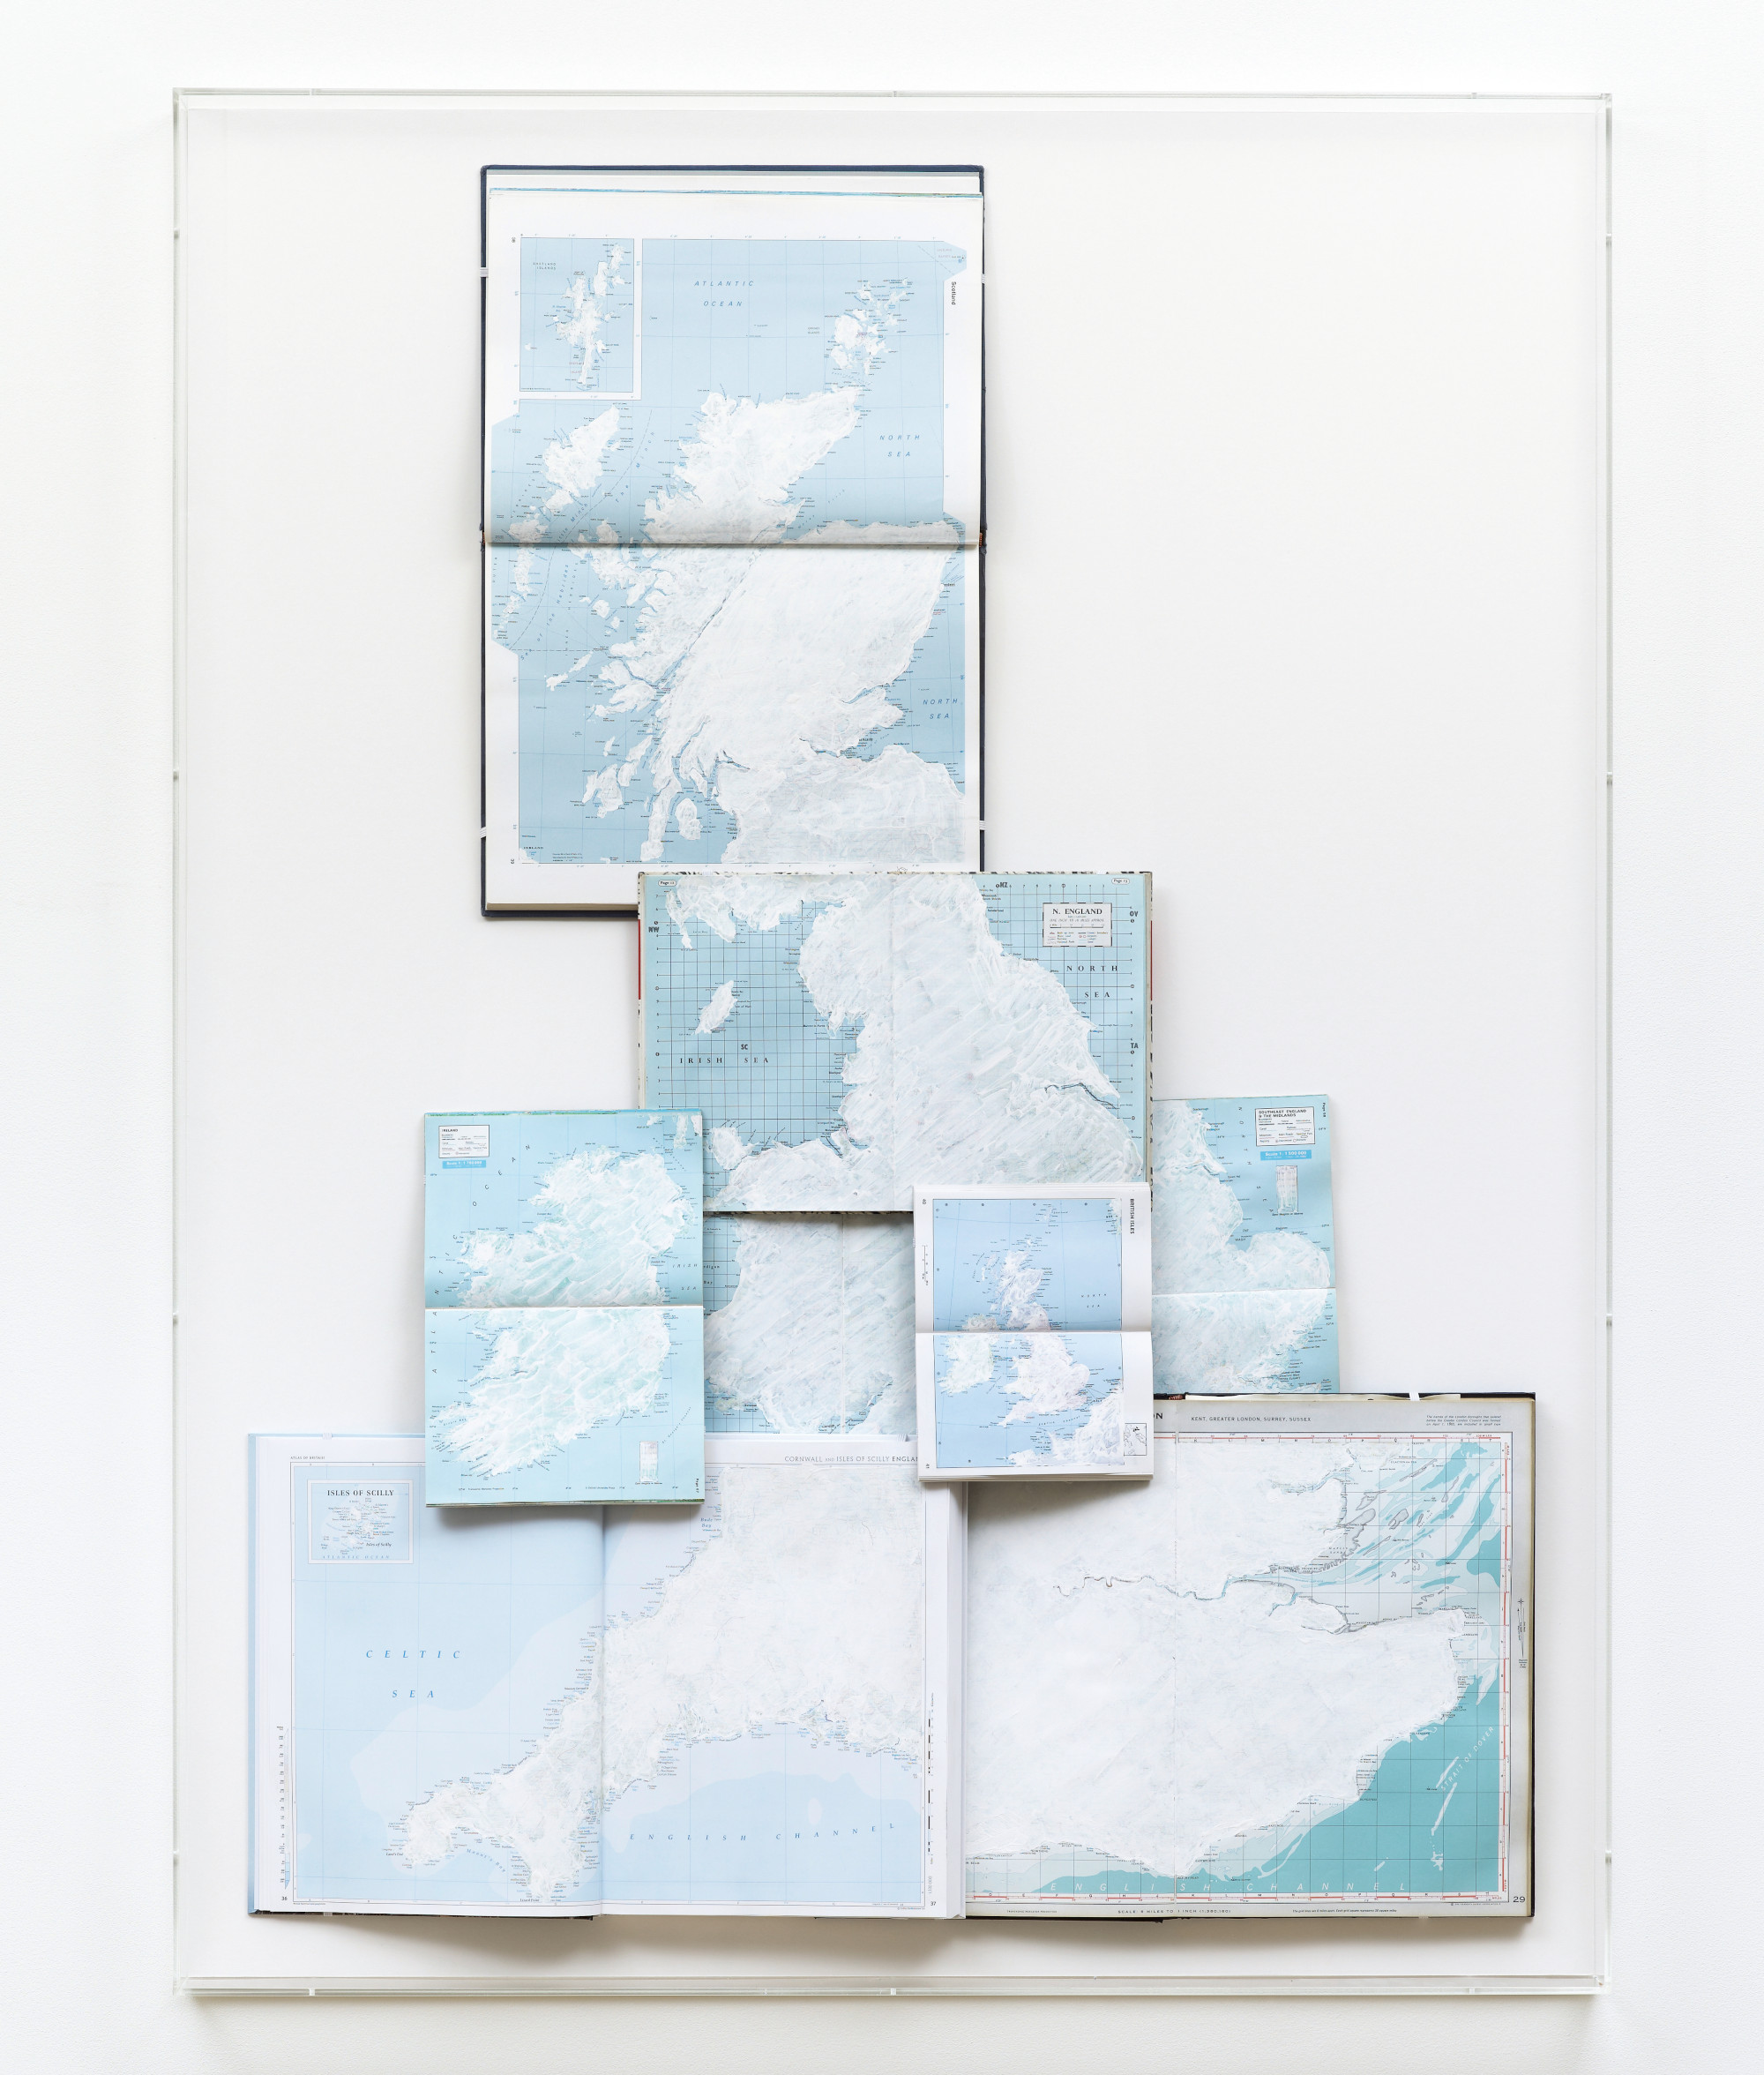 Only Blue (UK), 2015, by Tania Kovats